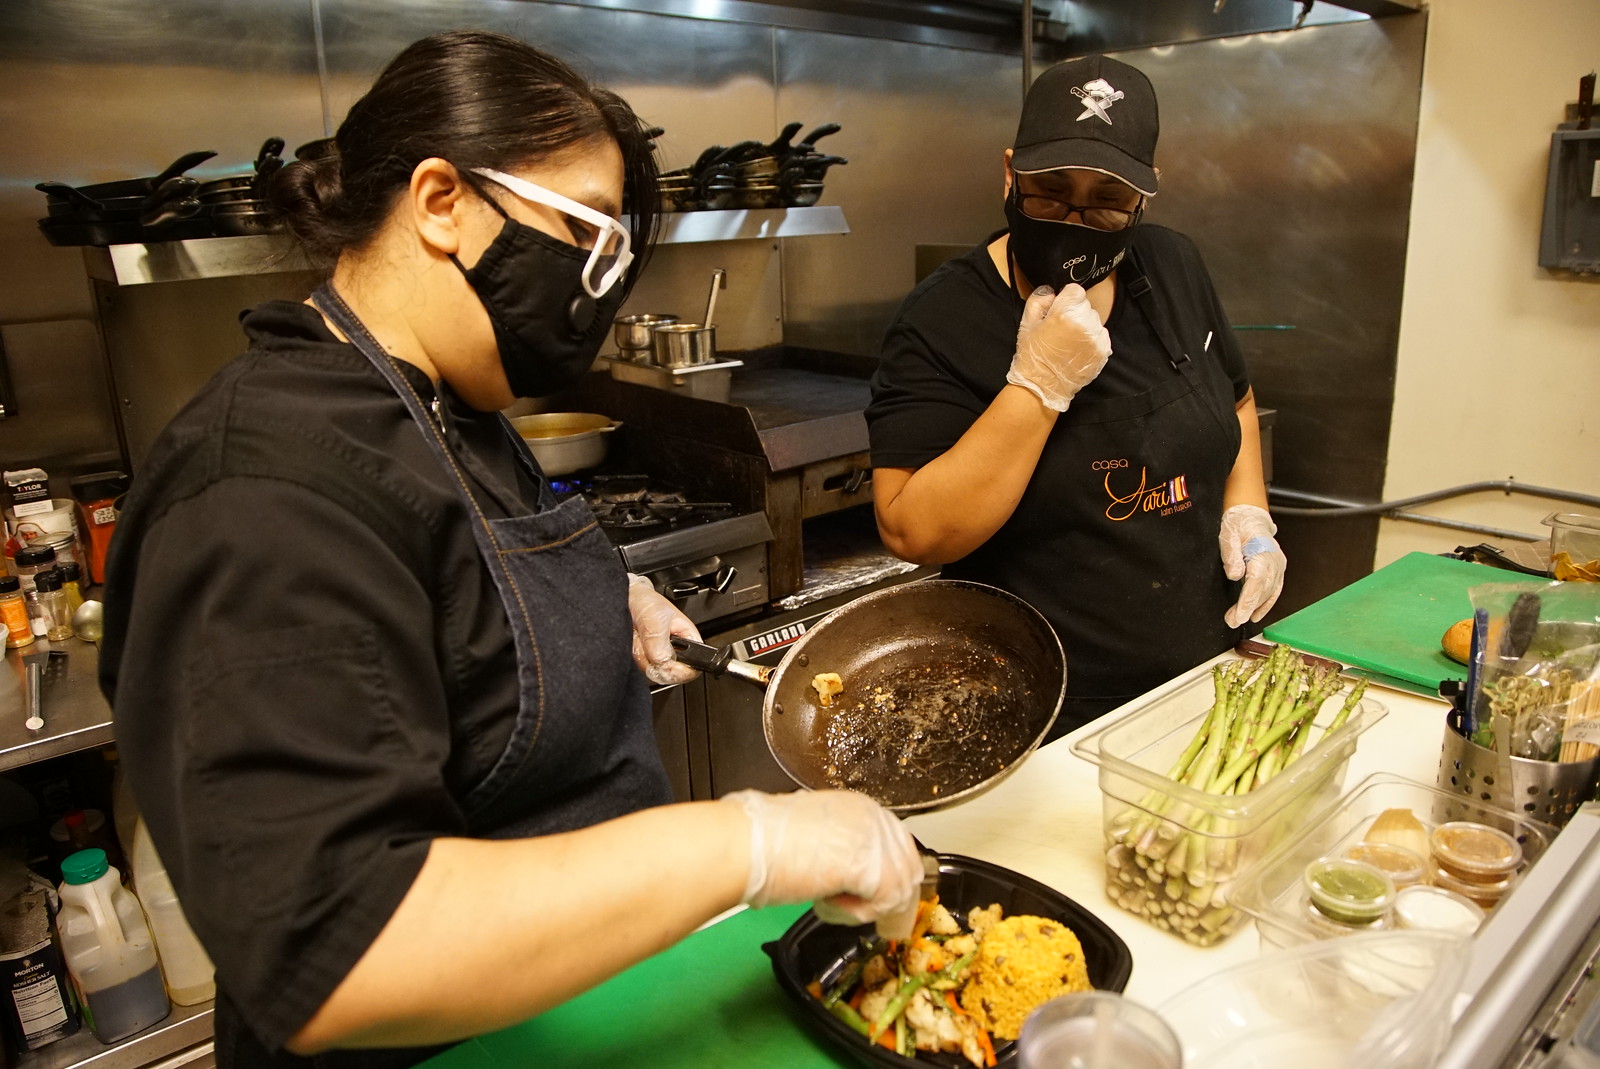 Two kitchen workers wearing masks preparing food.